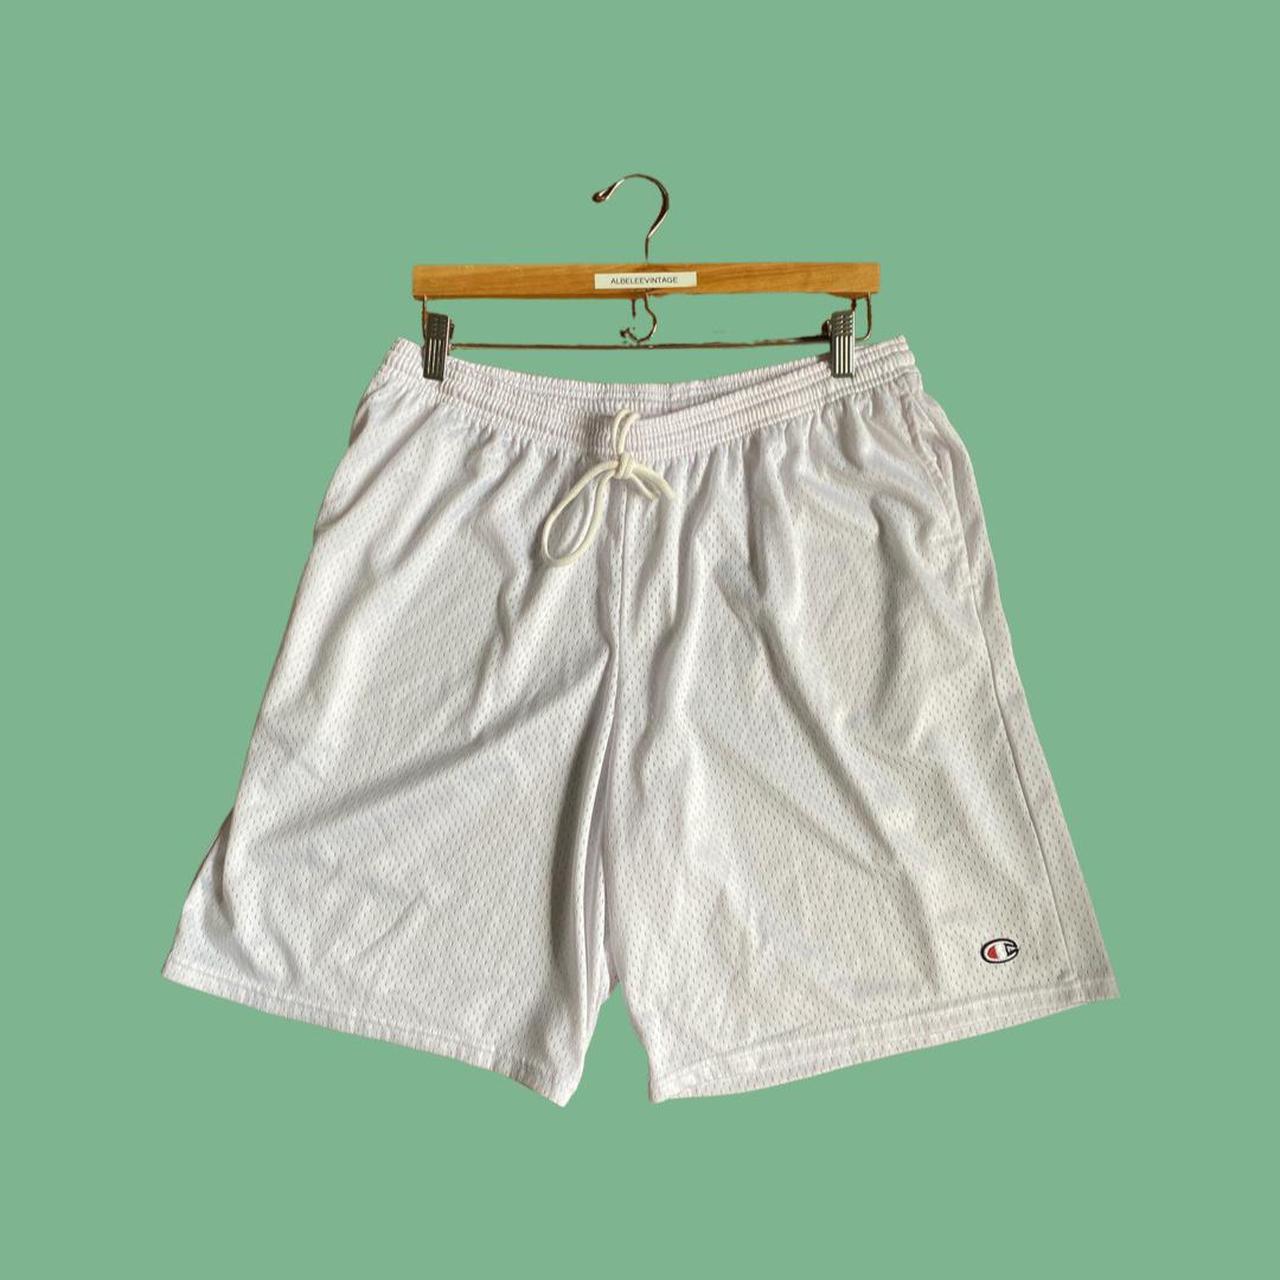 Product Image 1 - Champion mesh shorts 
100% polyester